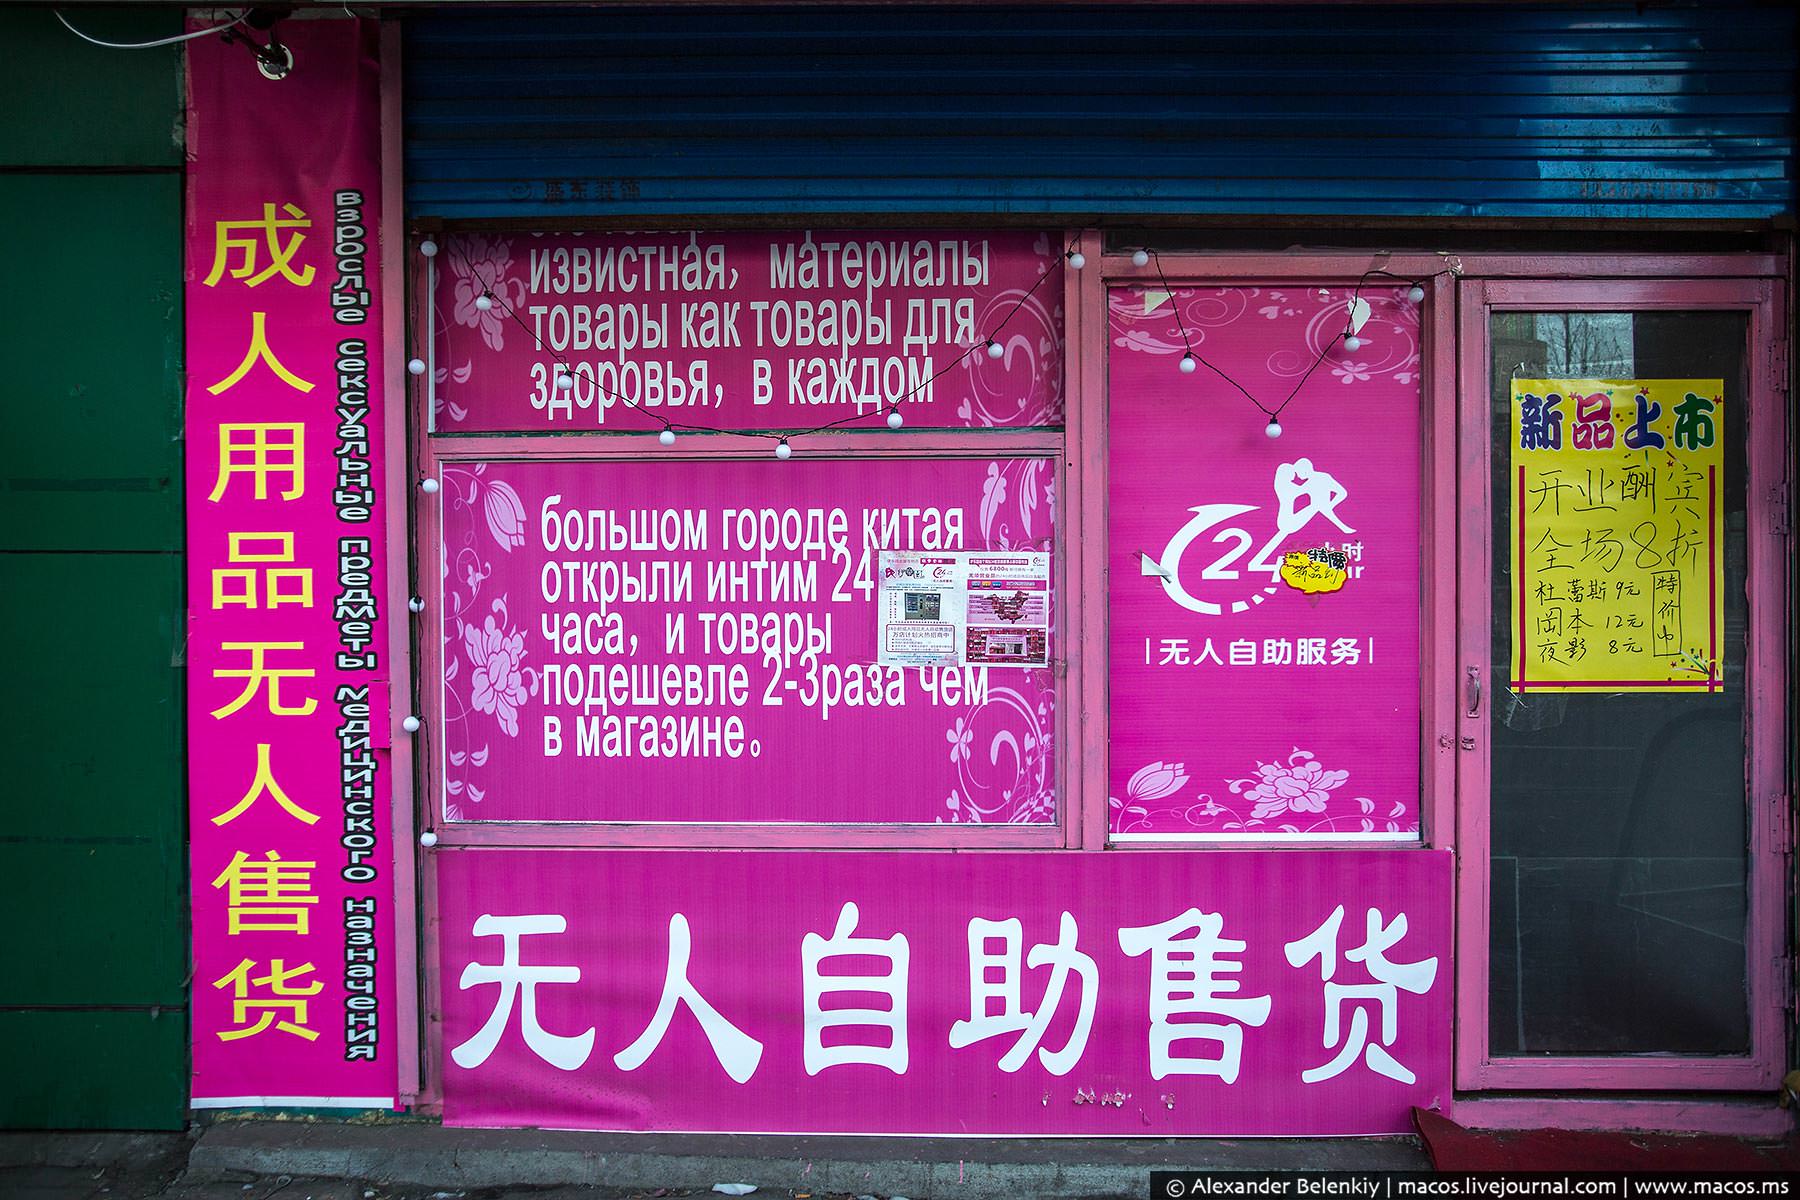 Heihe rural commercial bank. Китайский город Хэйхэ вывески. Китайские вывески. Смешные китайские вывески. Вывески китайских магазинов.